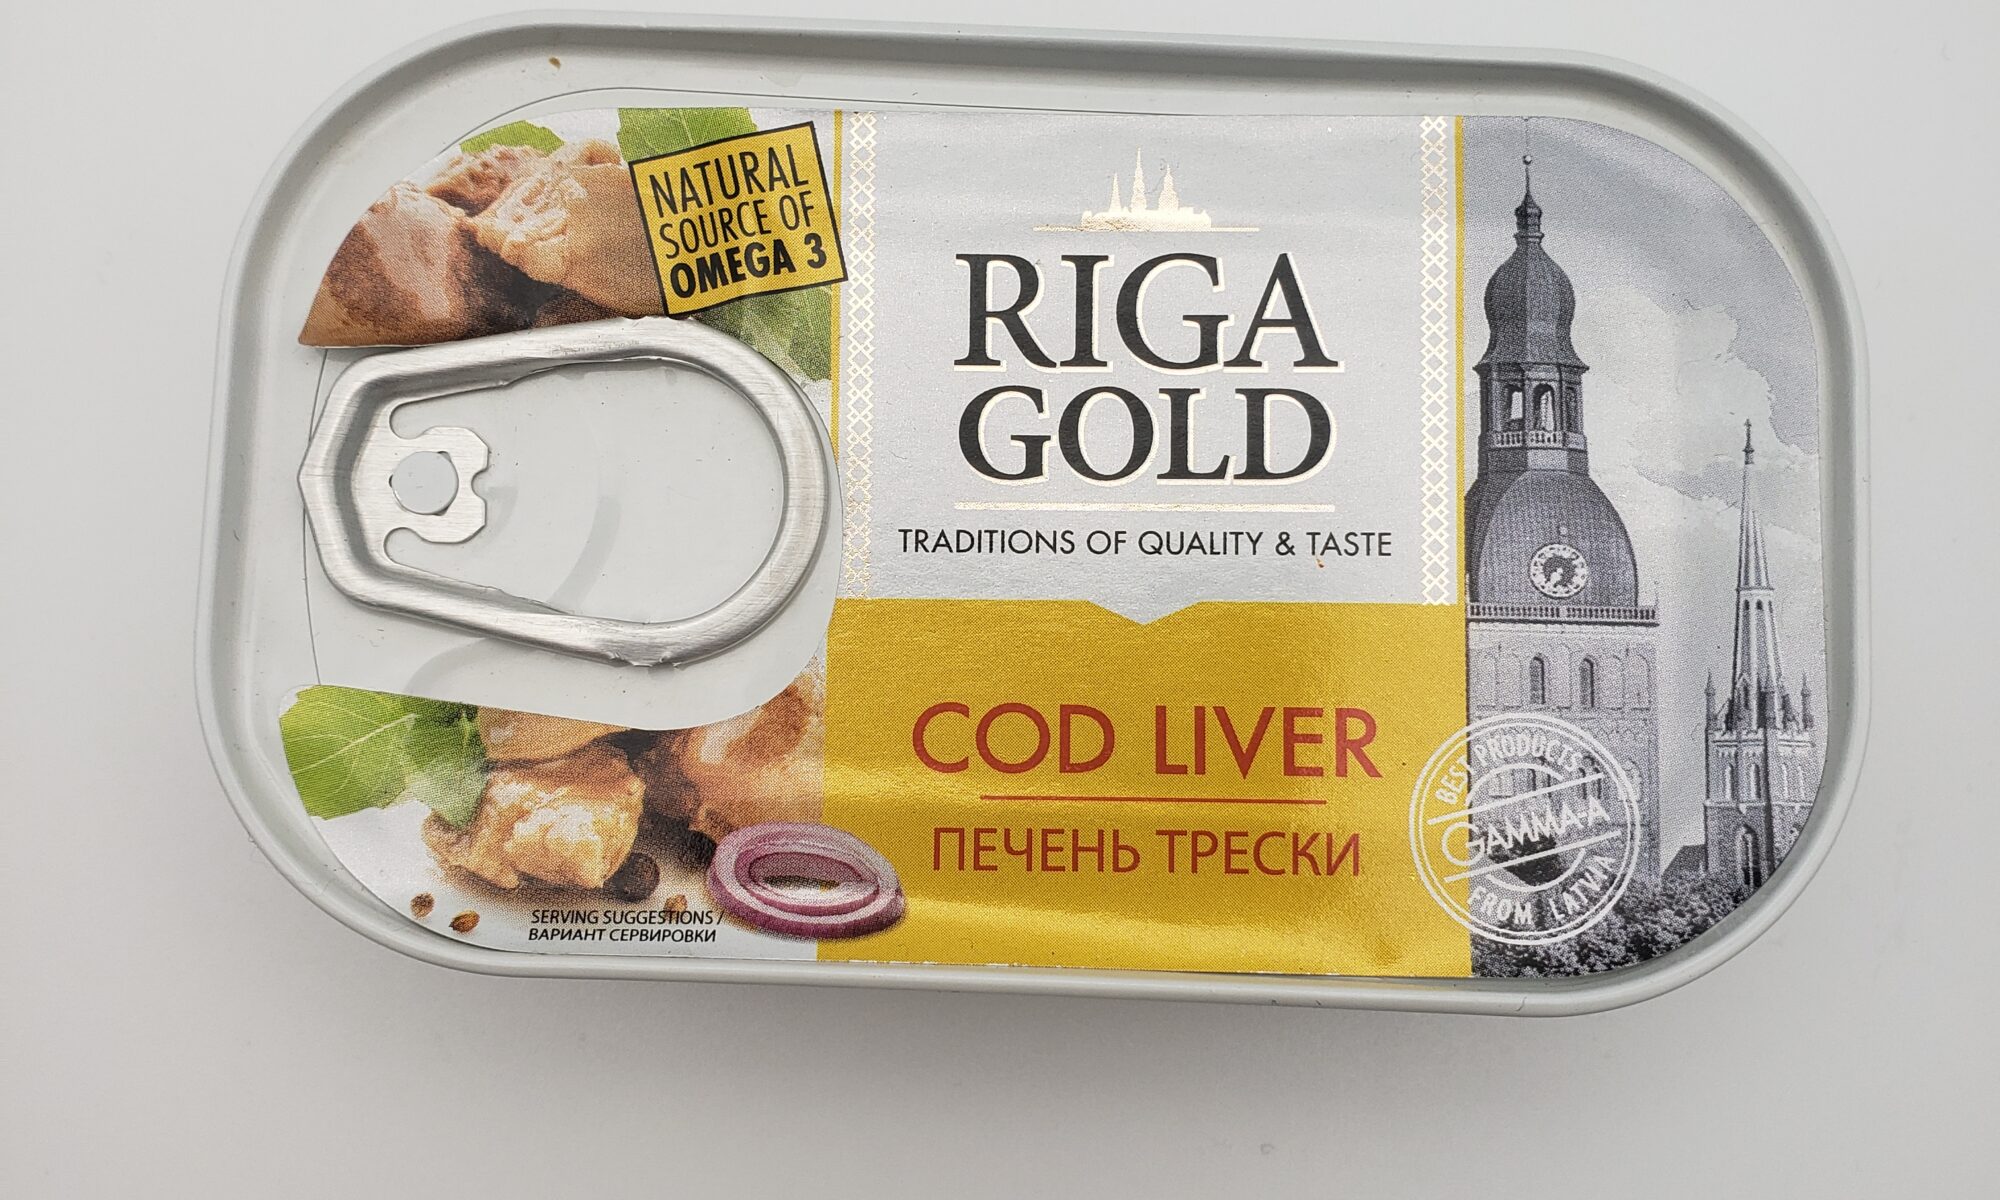 Image of Riga Gold cod liver tin